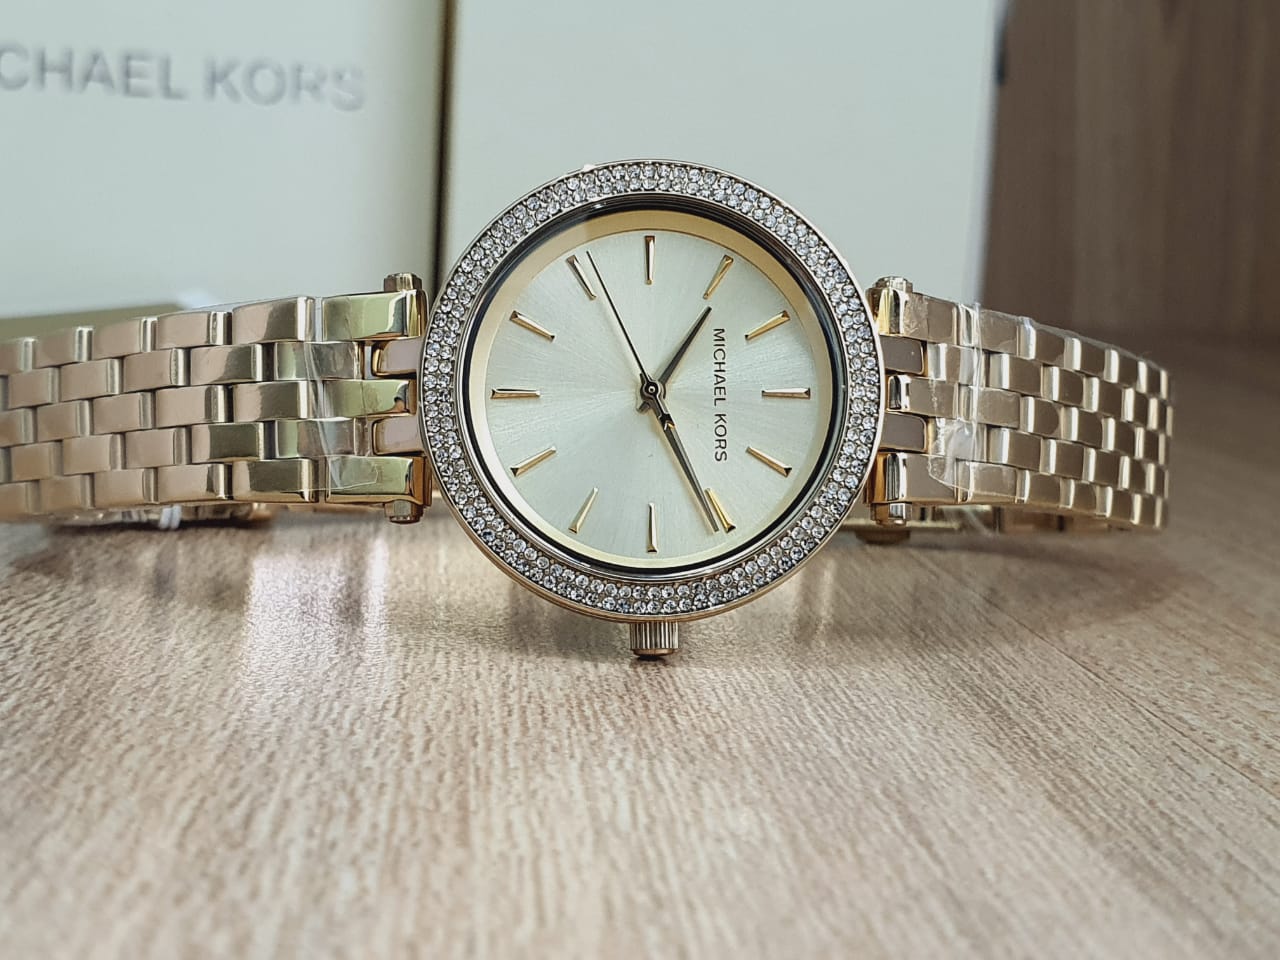 Michael Kors Women’s Quartz Gold Tone Stainless Steel 33mm Watch MK3430